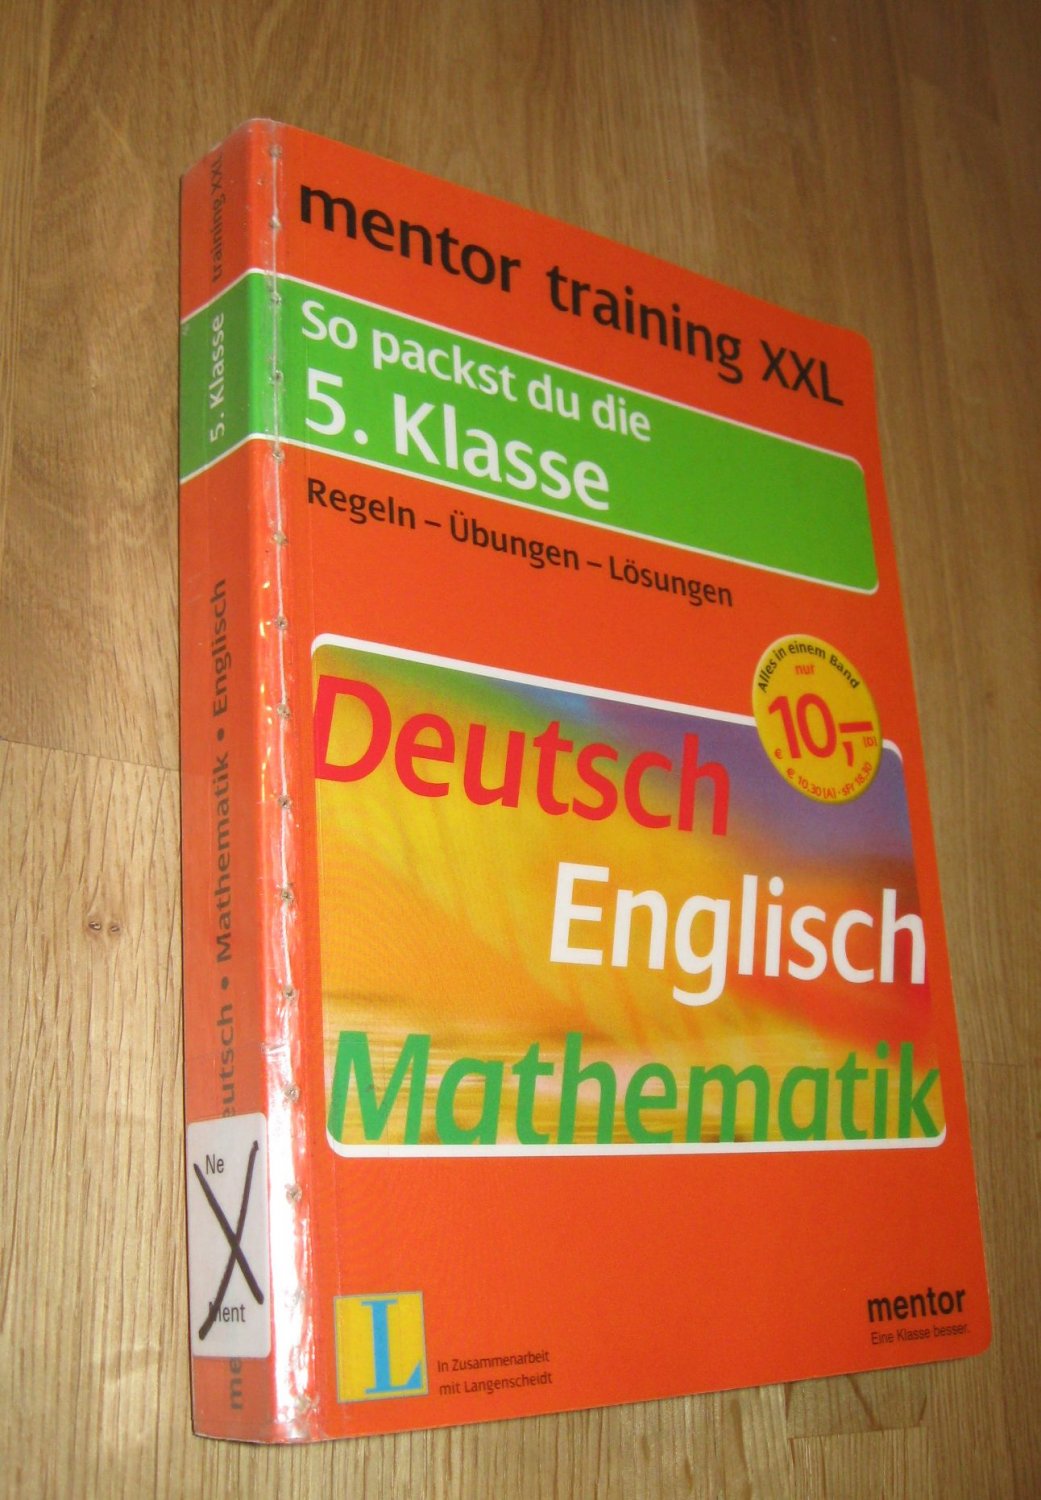 mentor training XXL / So packst du die 5. Klasse - Ludy, Georg; Mertel-Schmidt, Gisela; Haubrich, Jürgen; Leeb, Susanne